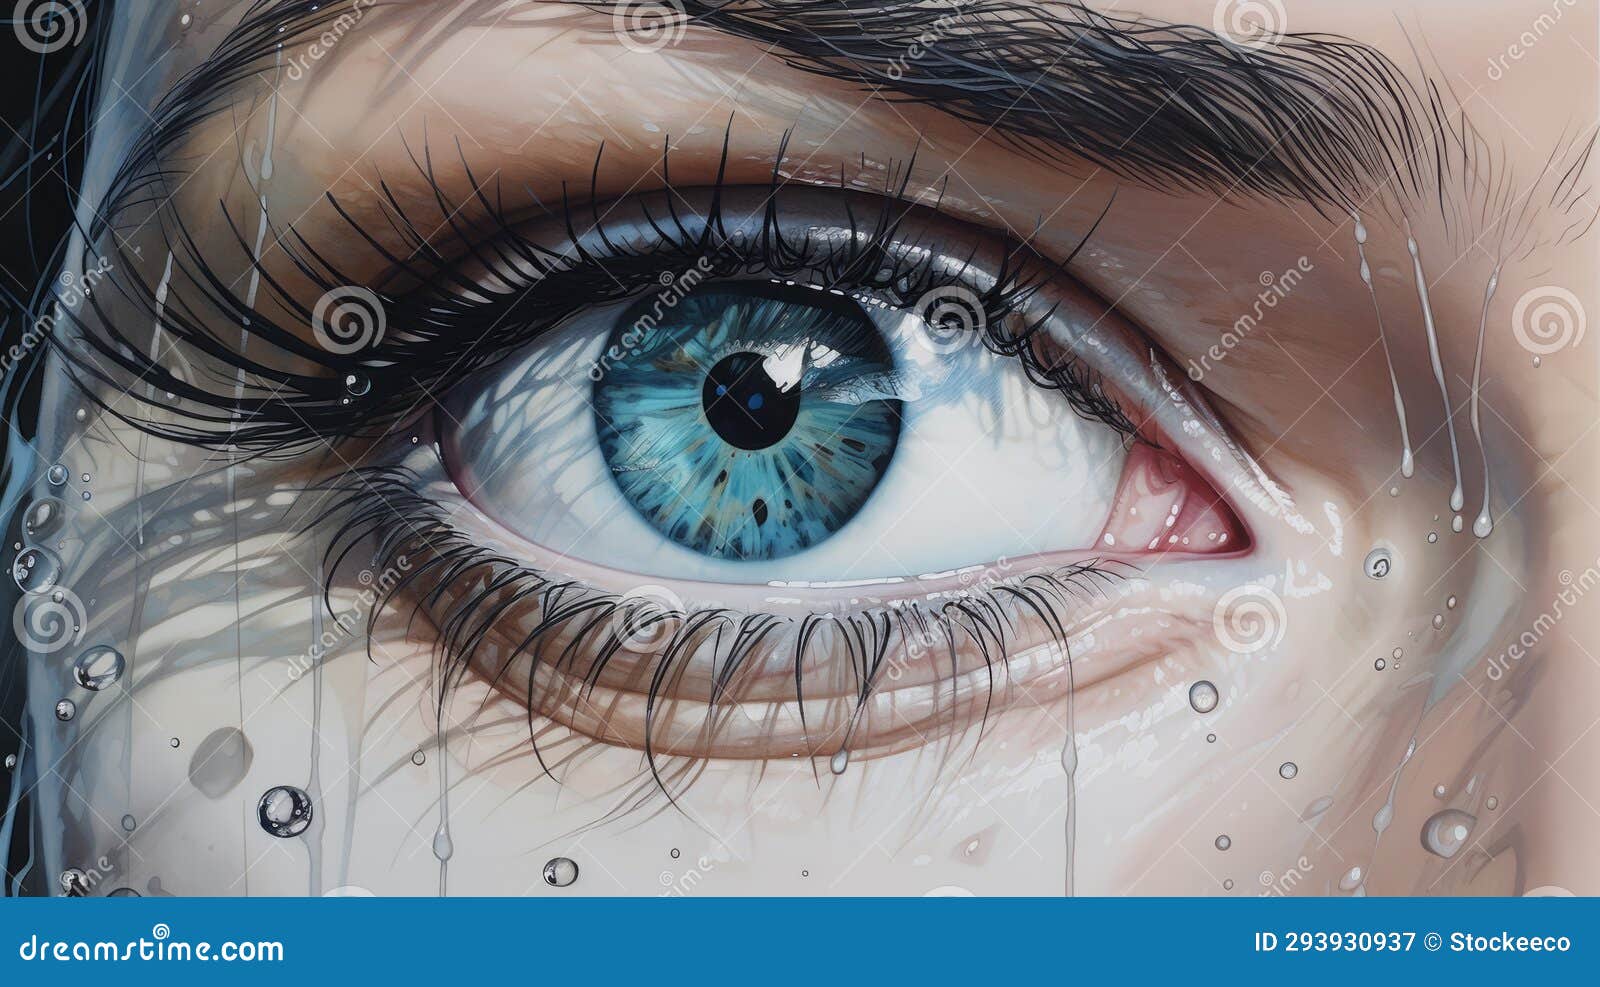 g's eyes: hyper-realistic eye paintings by ludo fenzi